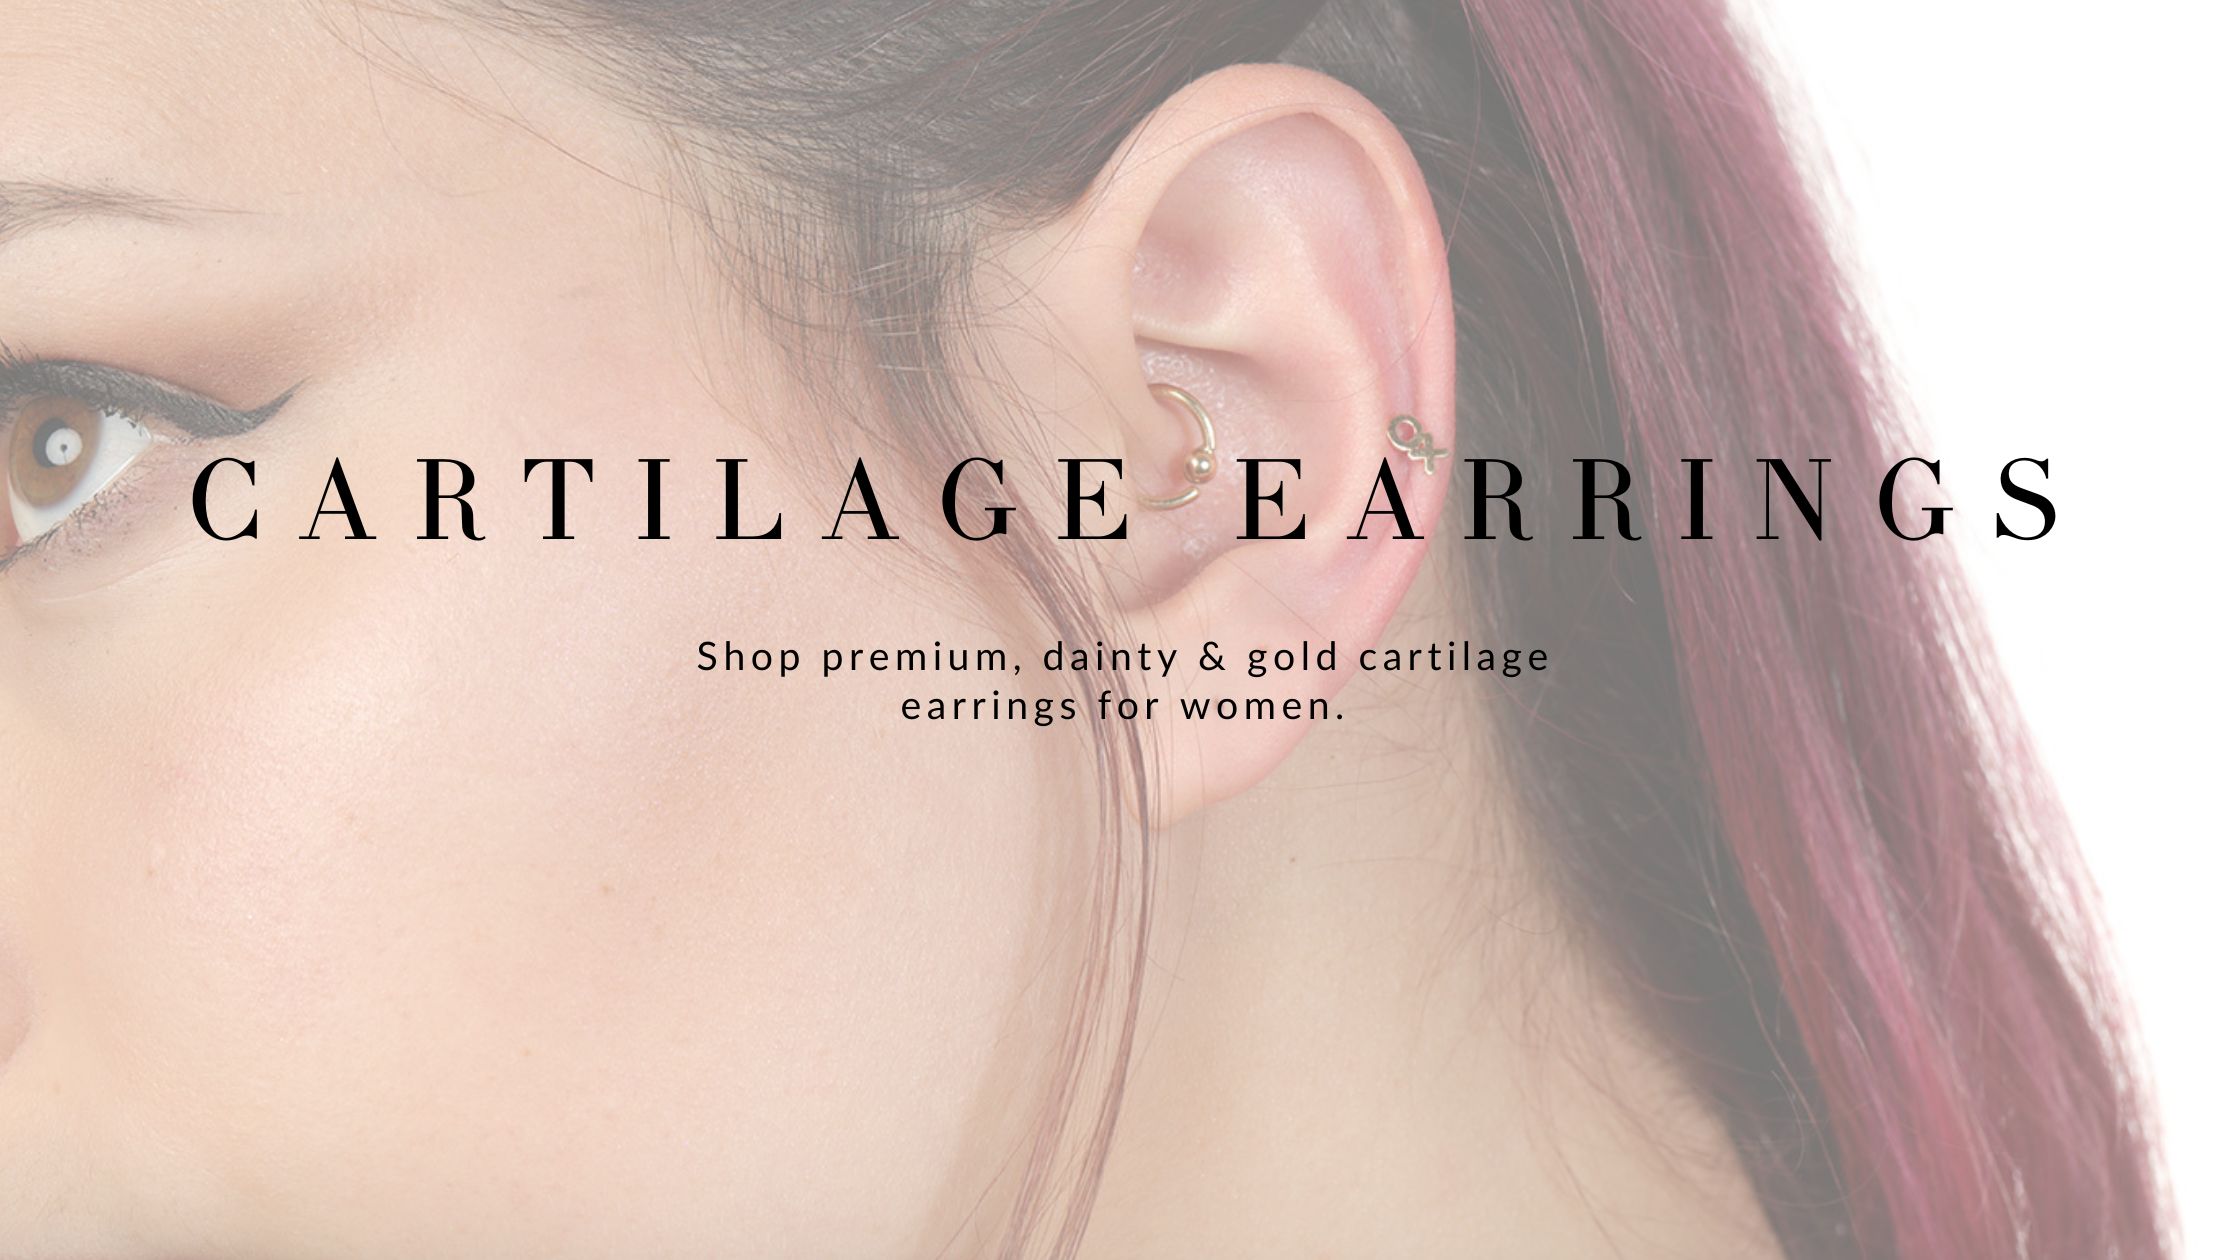 Shop premium, dainty & gold cartilage earrings for women